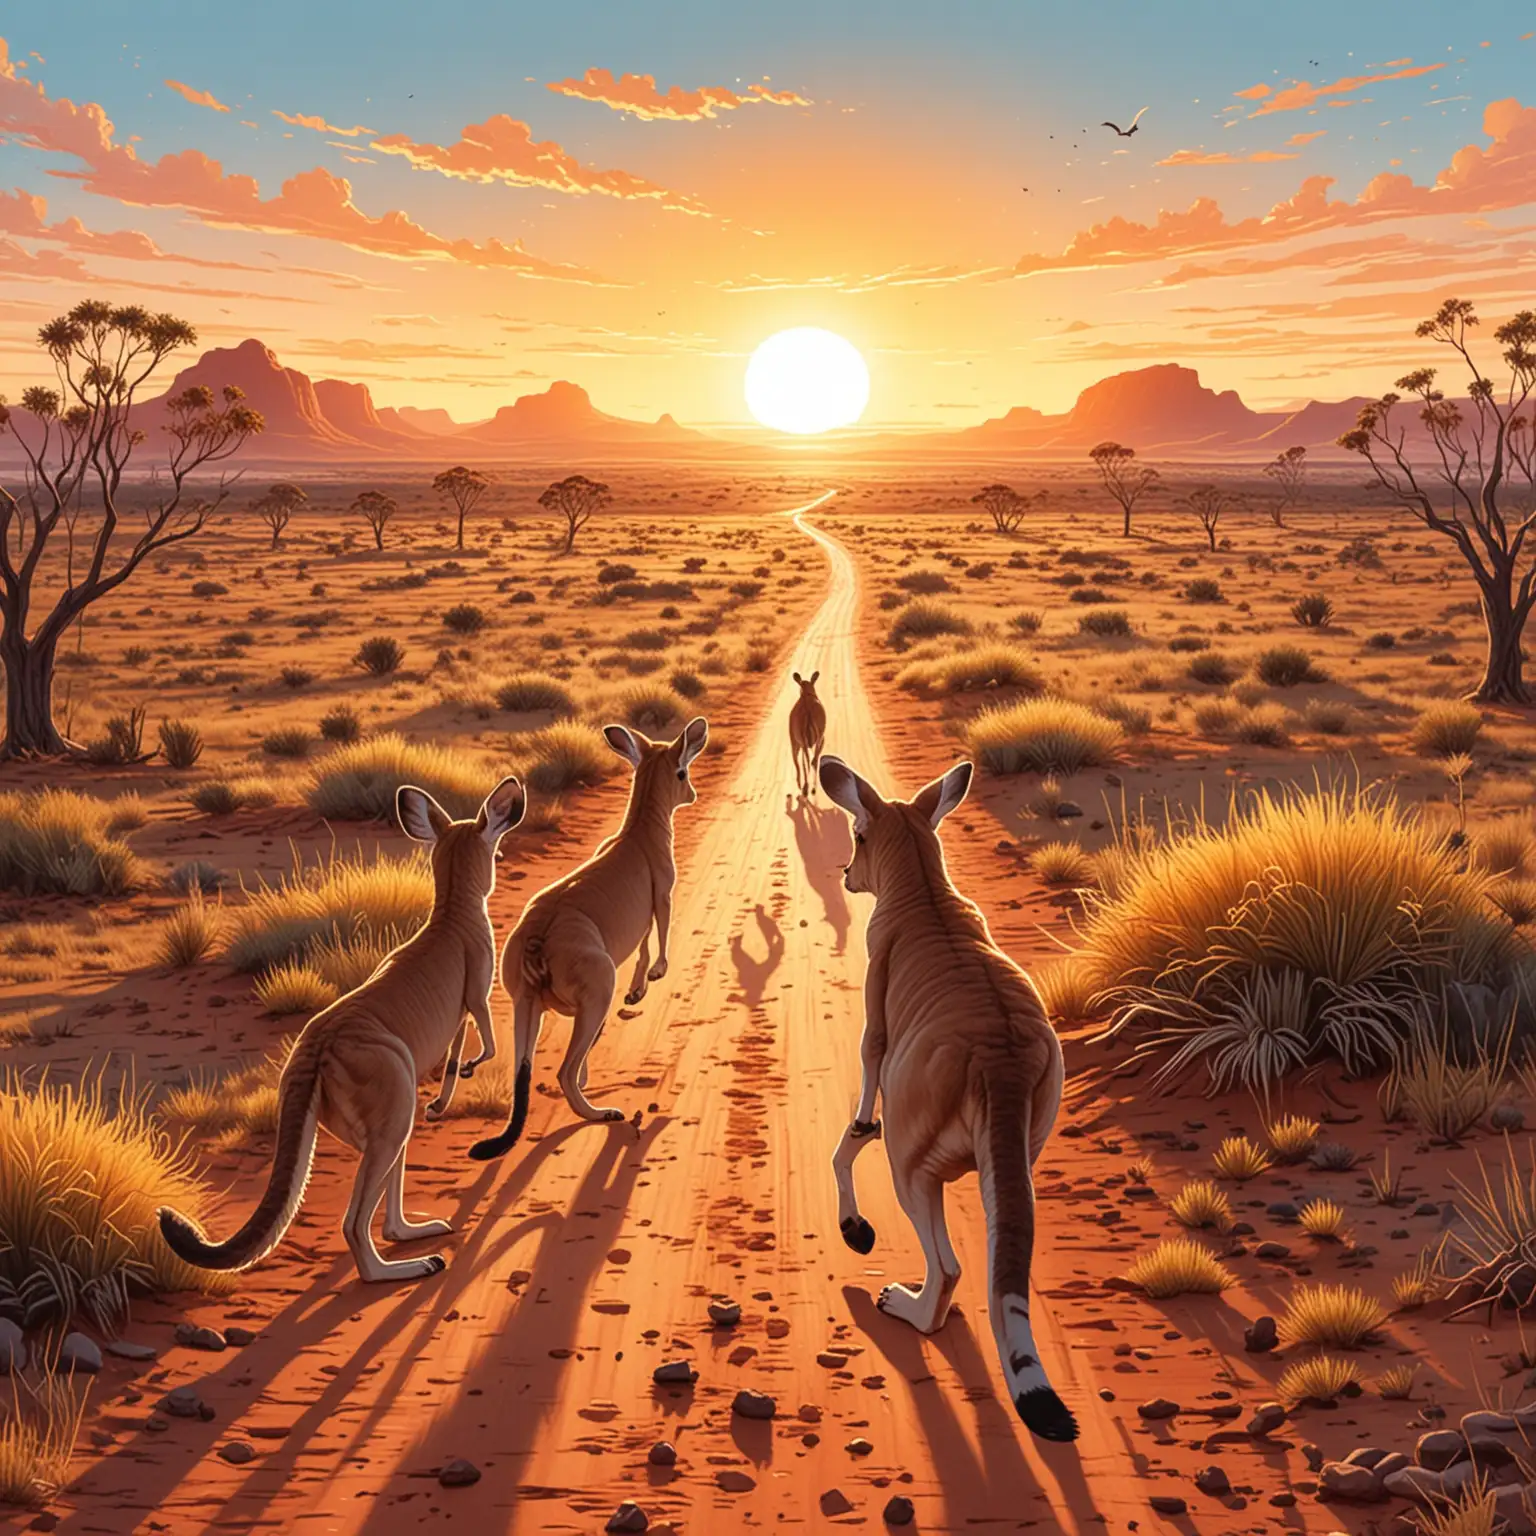 Kawaii Style Kangaroos Hopping at Sunrise in the Australian Outback